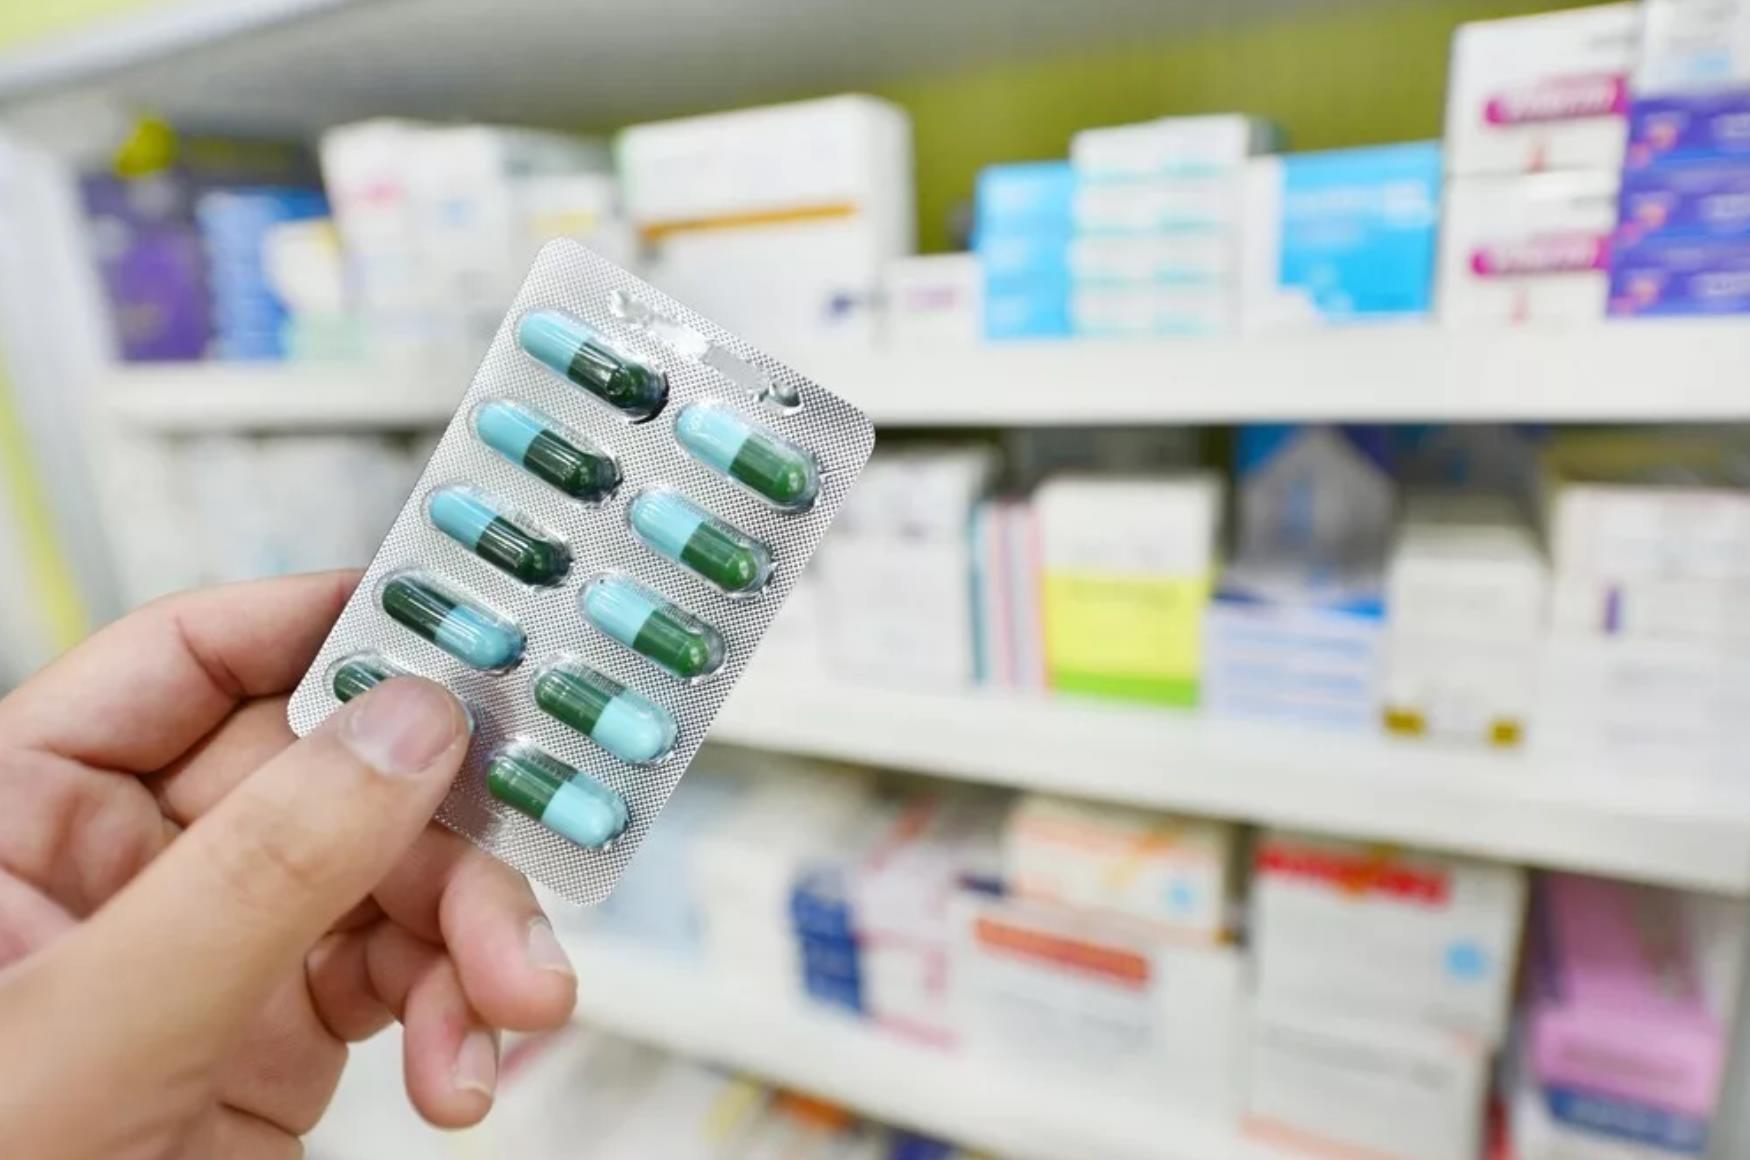 Особенности аптек болгарии и покупка лекарств